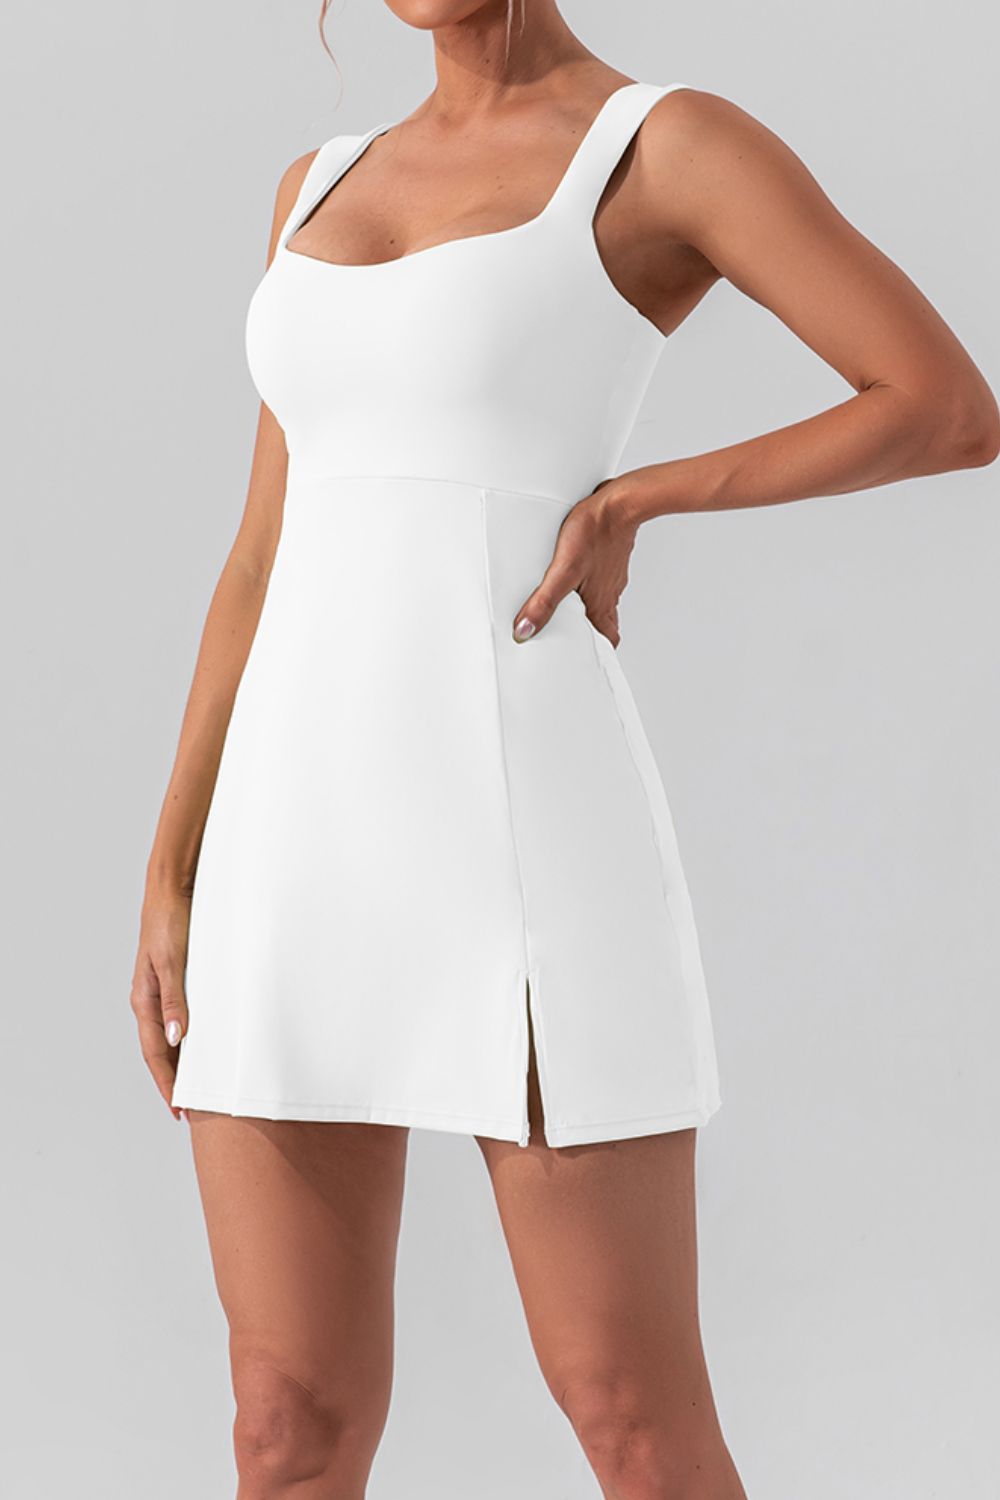 Everyday Casual Plain Mini Dress Stretchy Nylon Sleeveless Slit Short Active Summer Dress KESLEY